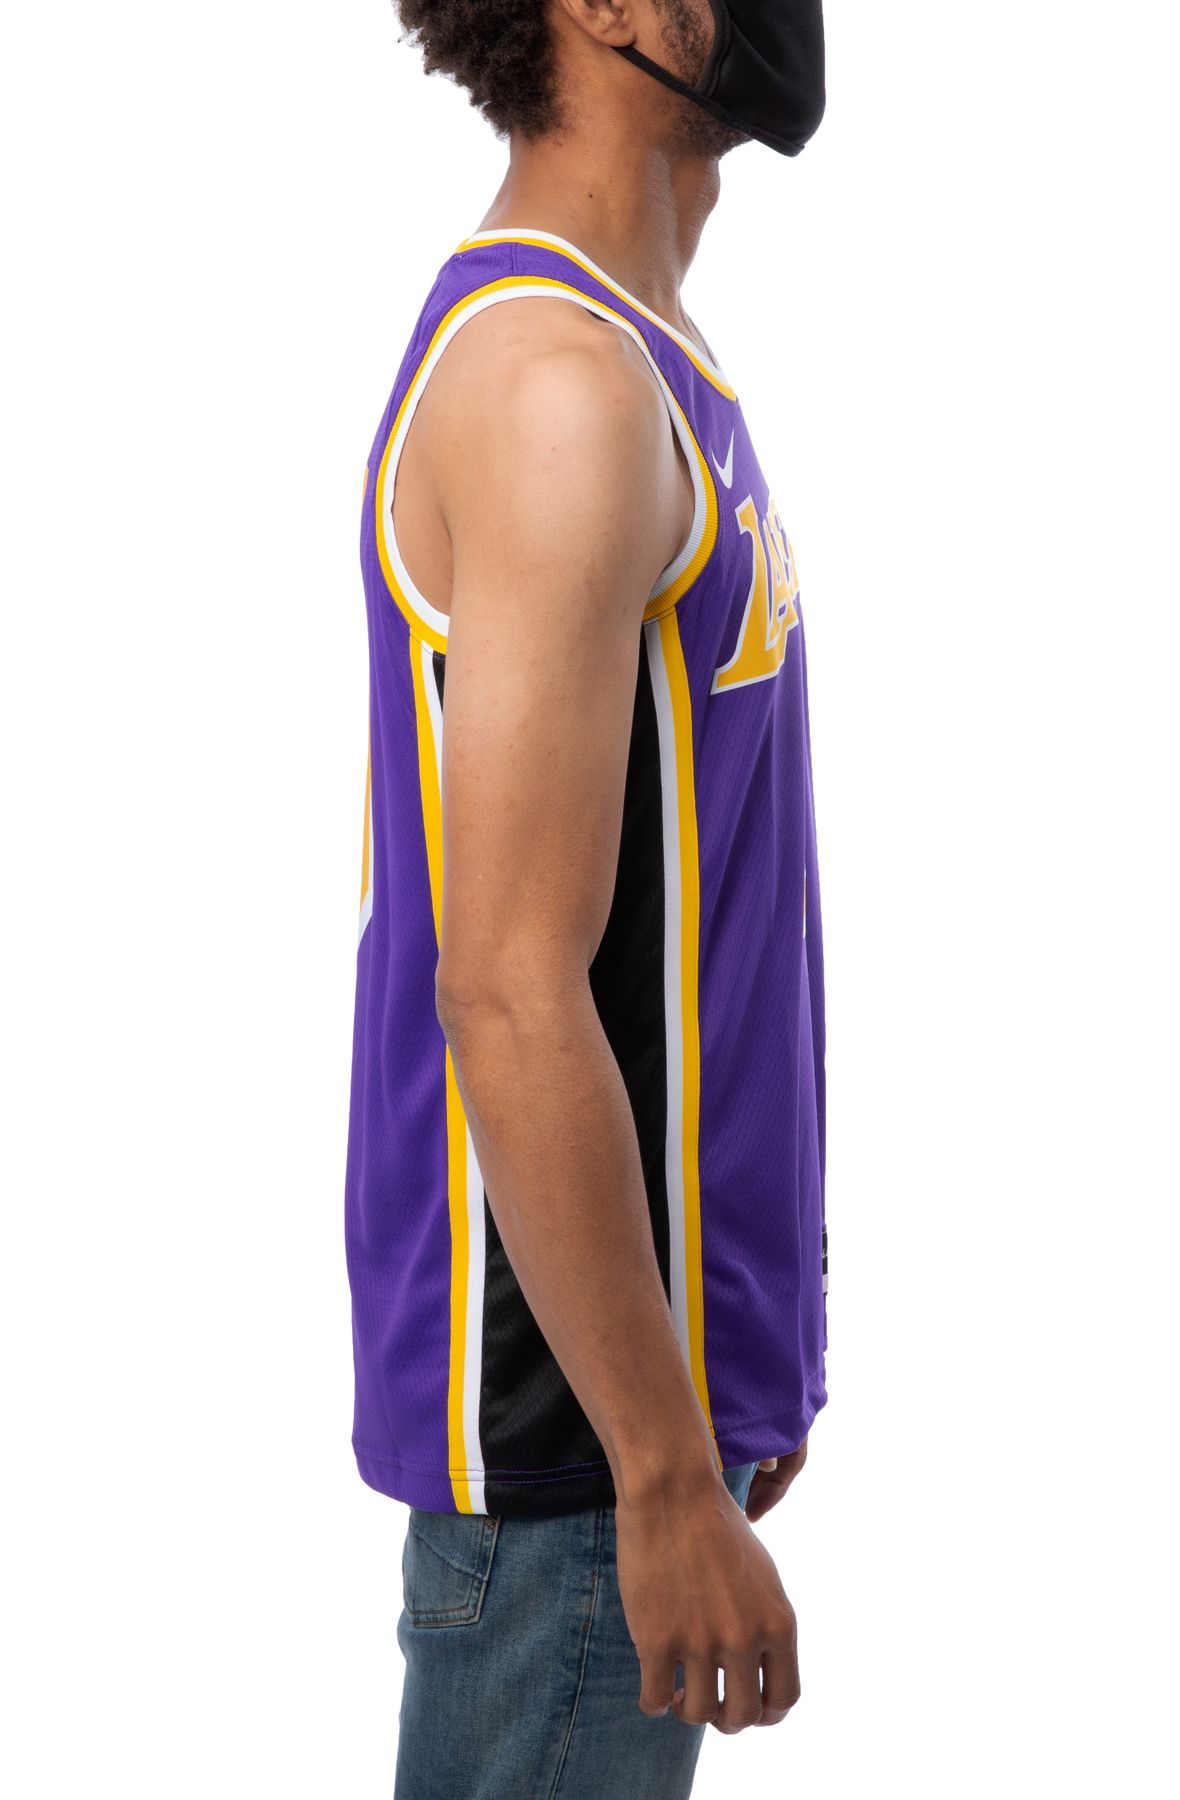 Jordan Mens Anthony Davis Lakers Statement Swingman Jersey - Field Purple/Yellow/Black Size M